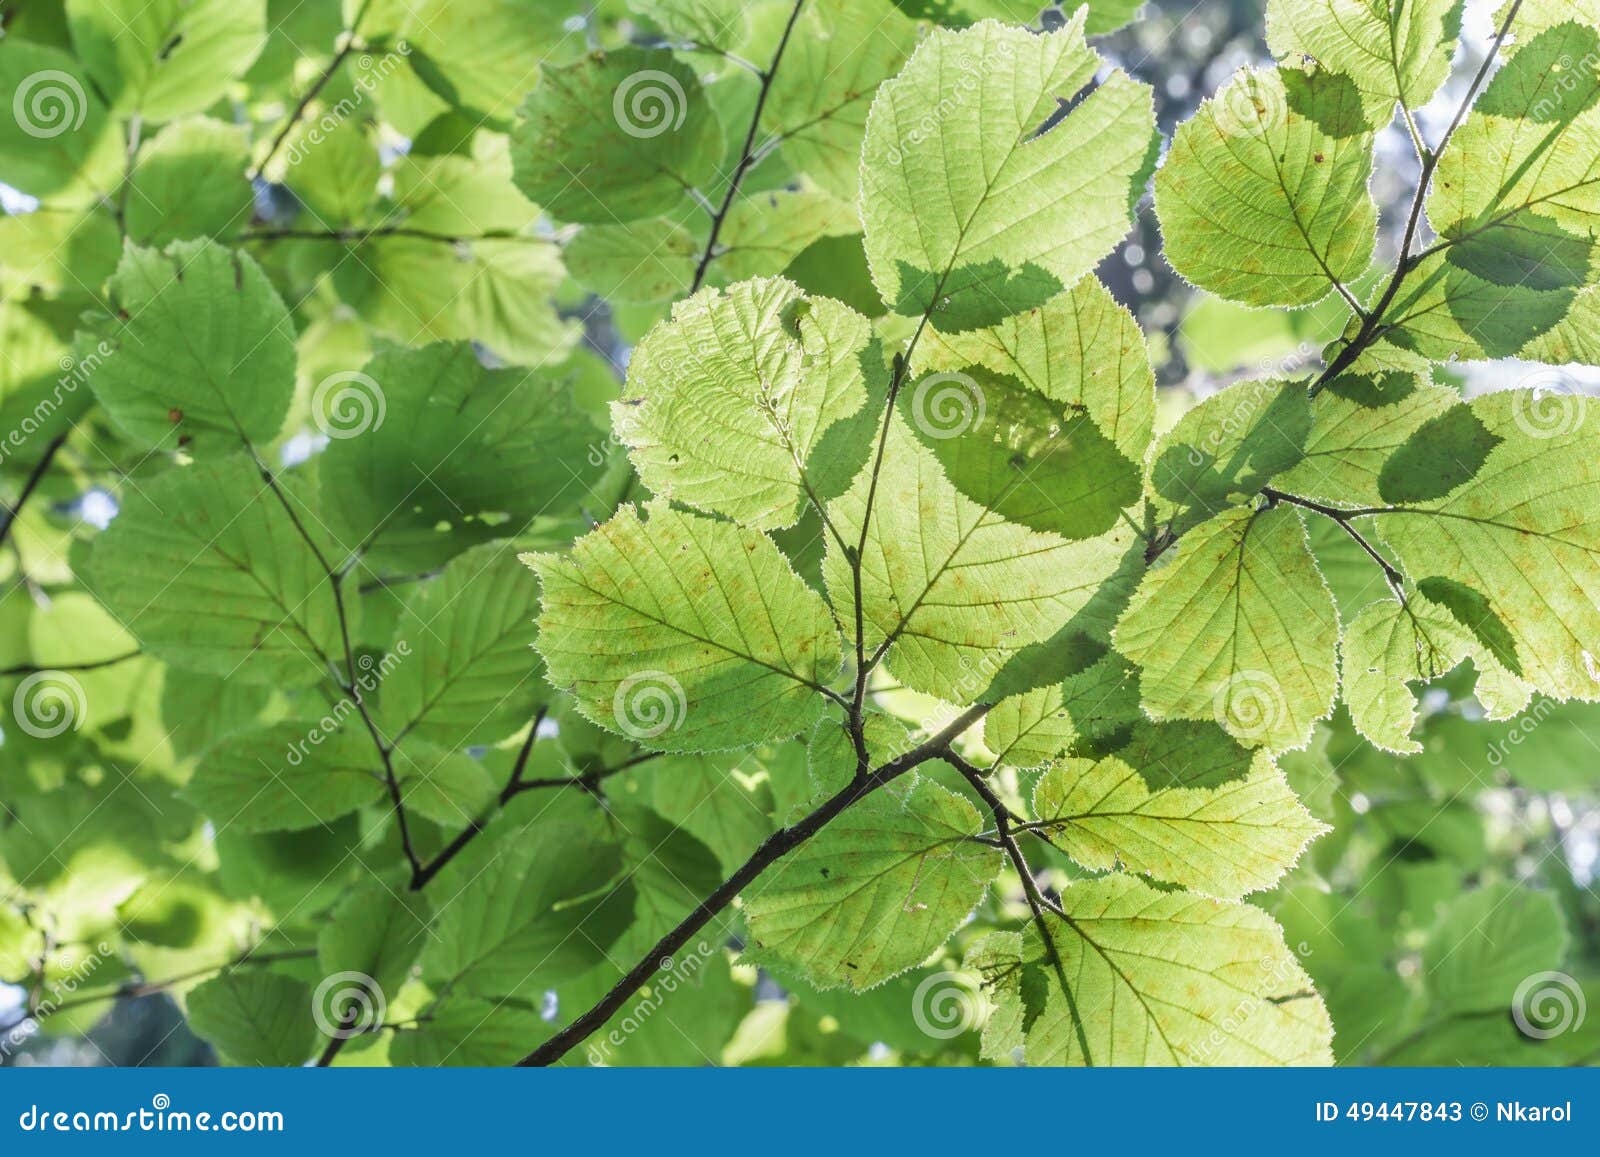 green leaves background of corylus avellana